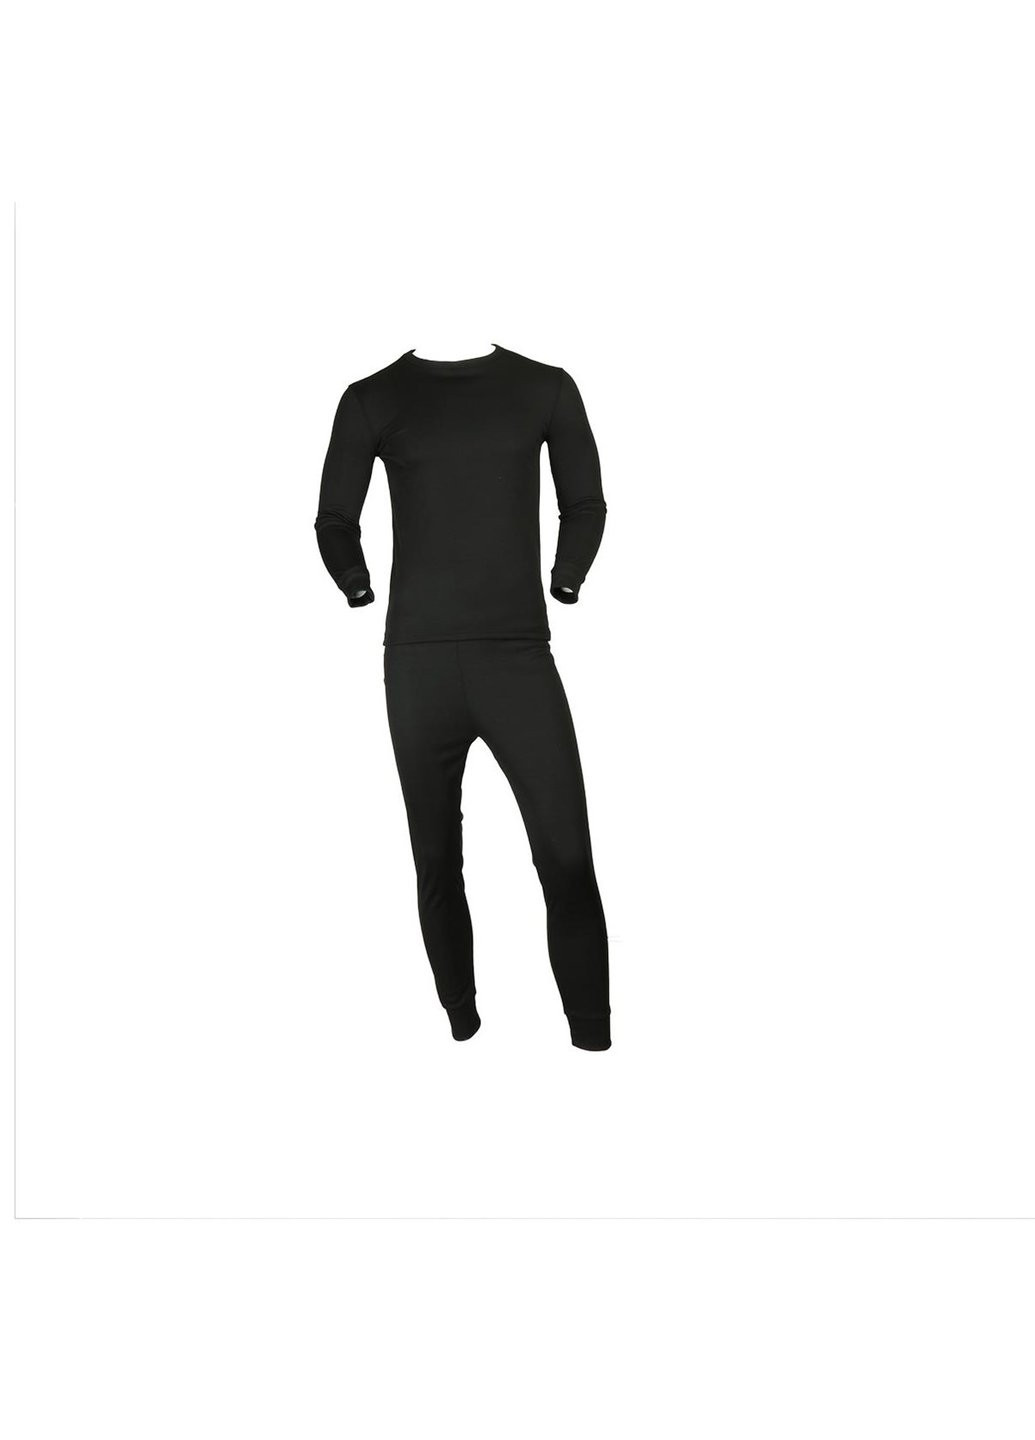 Черный летний термобелье мужское костюм dynamic турция m 8111 черное Thermo